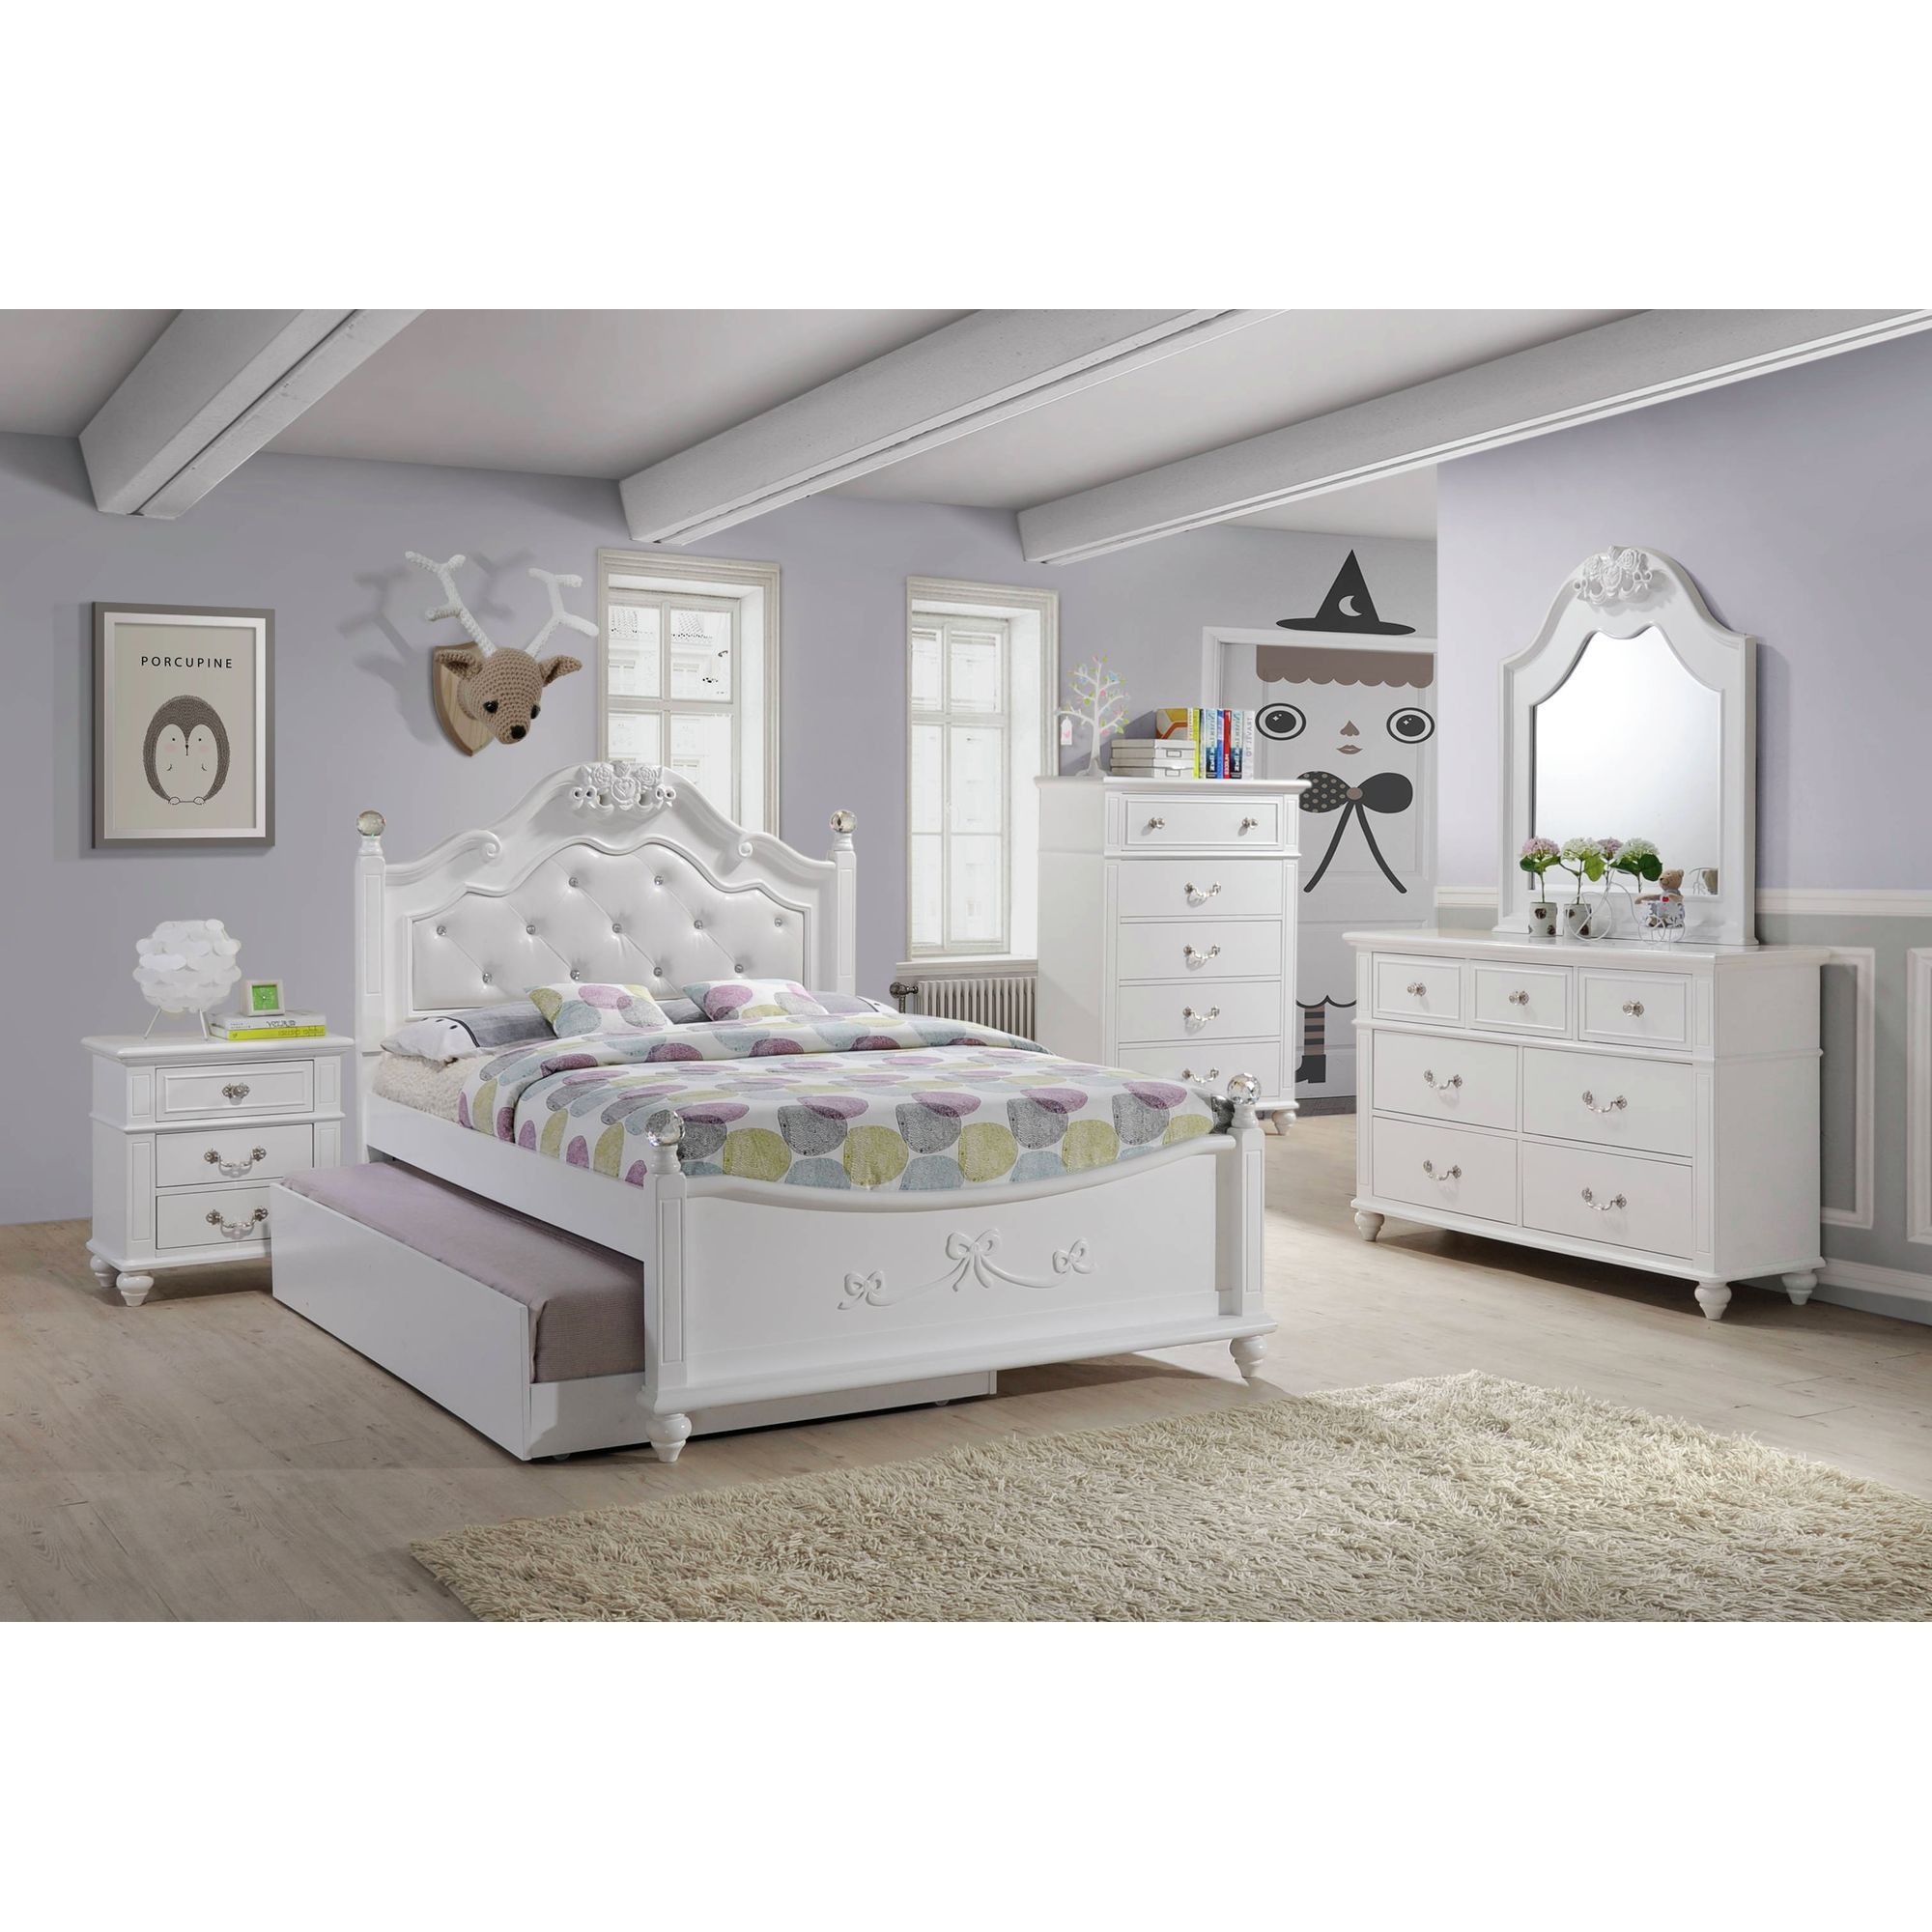 Alana - Full Platform 3 Piece Bedroom Set With Storage Trundle - White